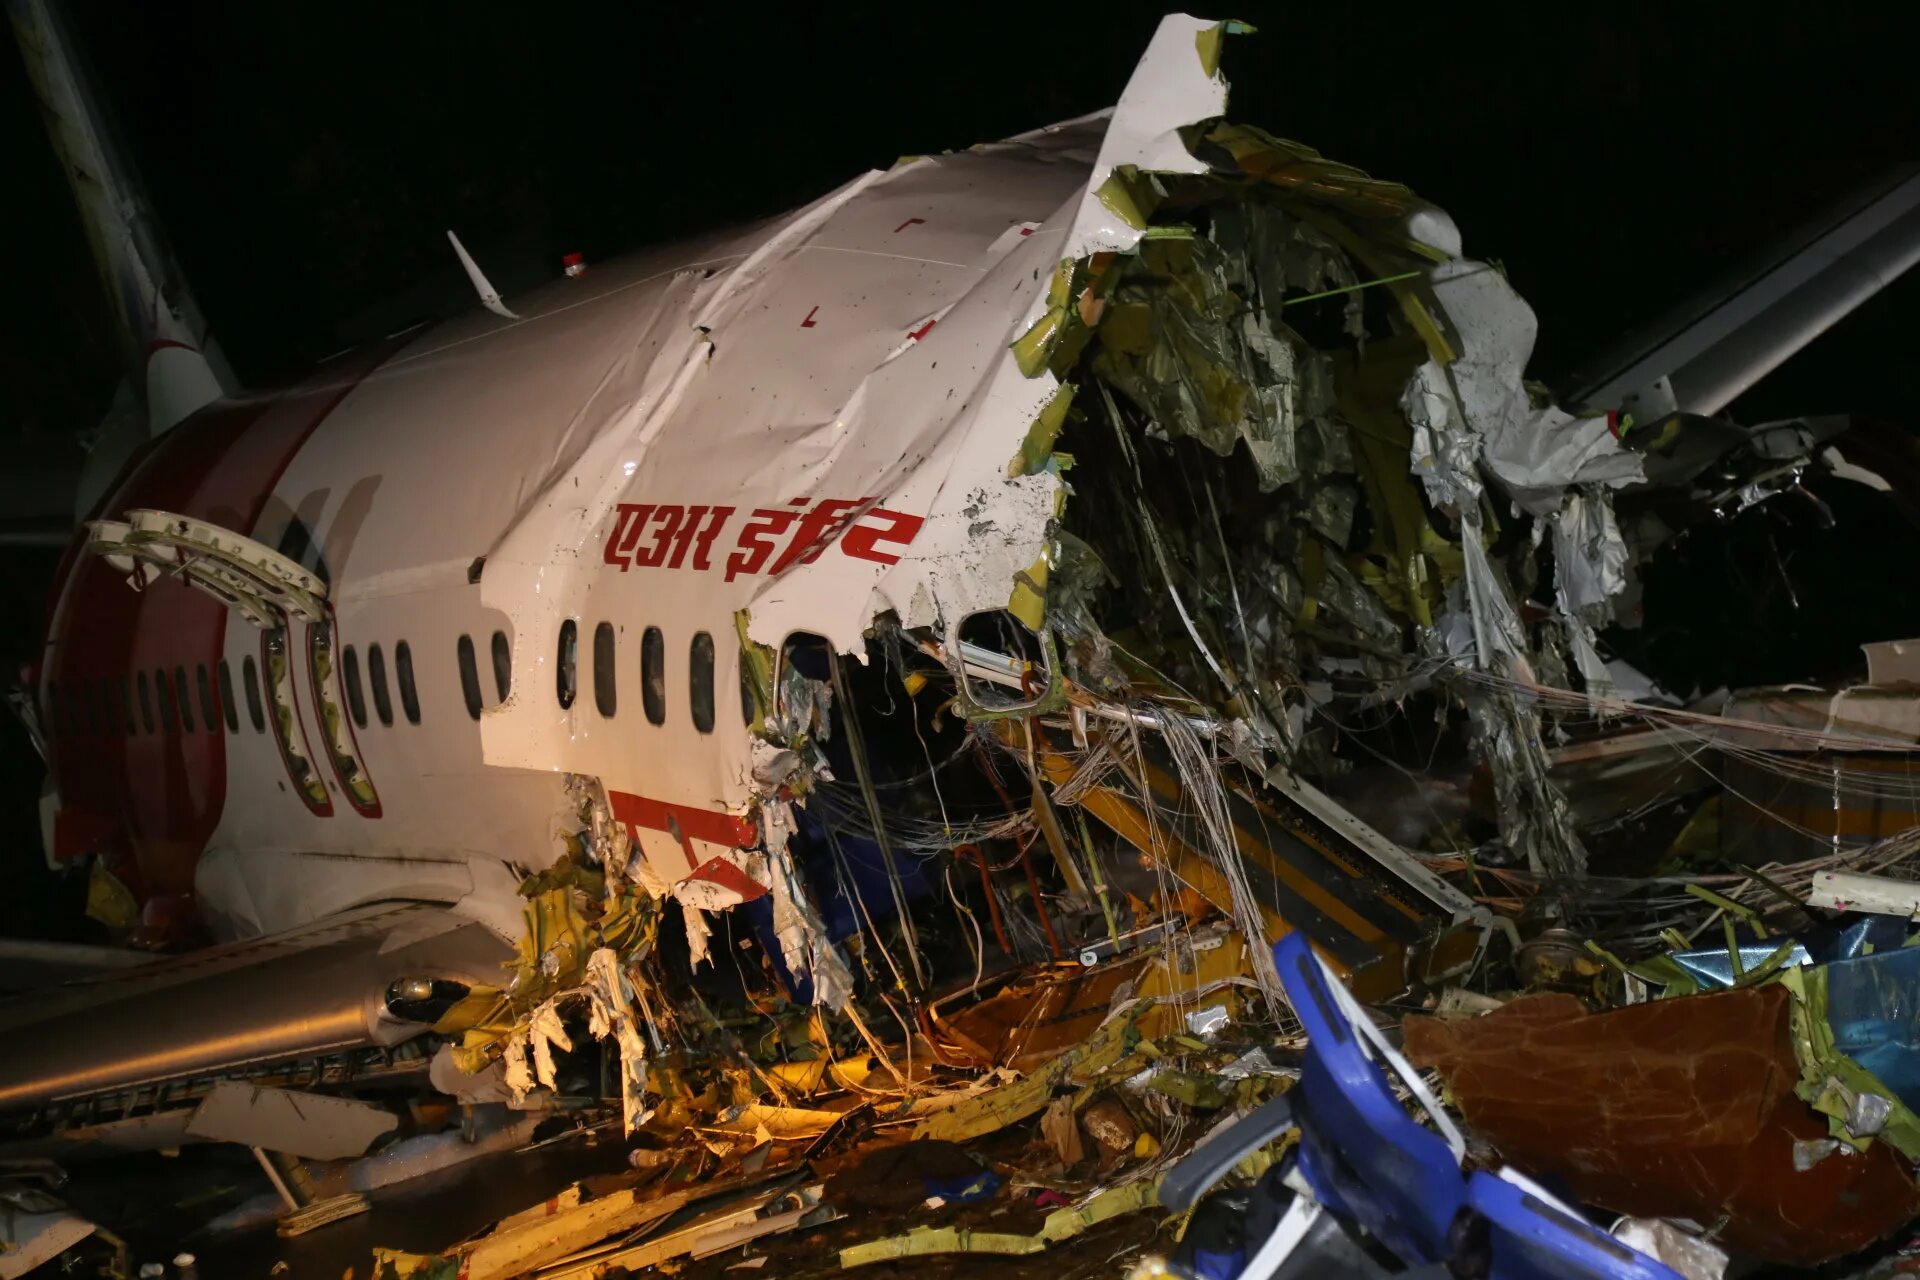 Boeing 747 Air India катастрофа. Боинг 747 АИР Индия теракт. Авиакатастрофа 20